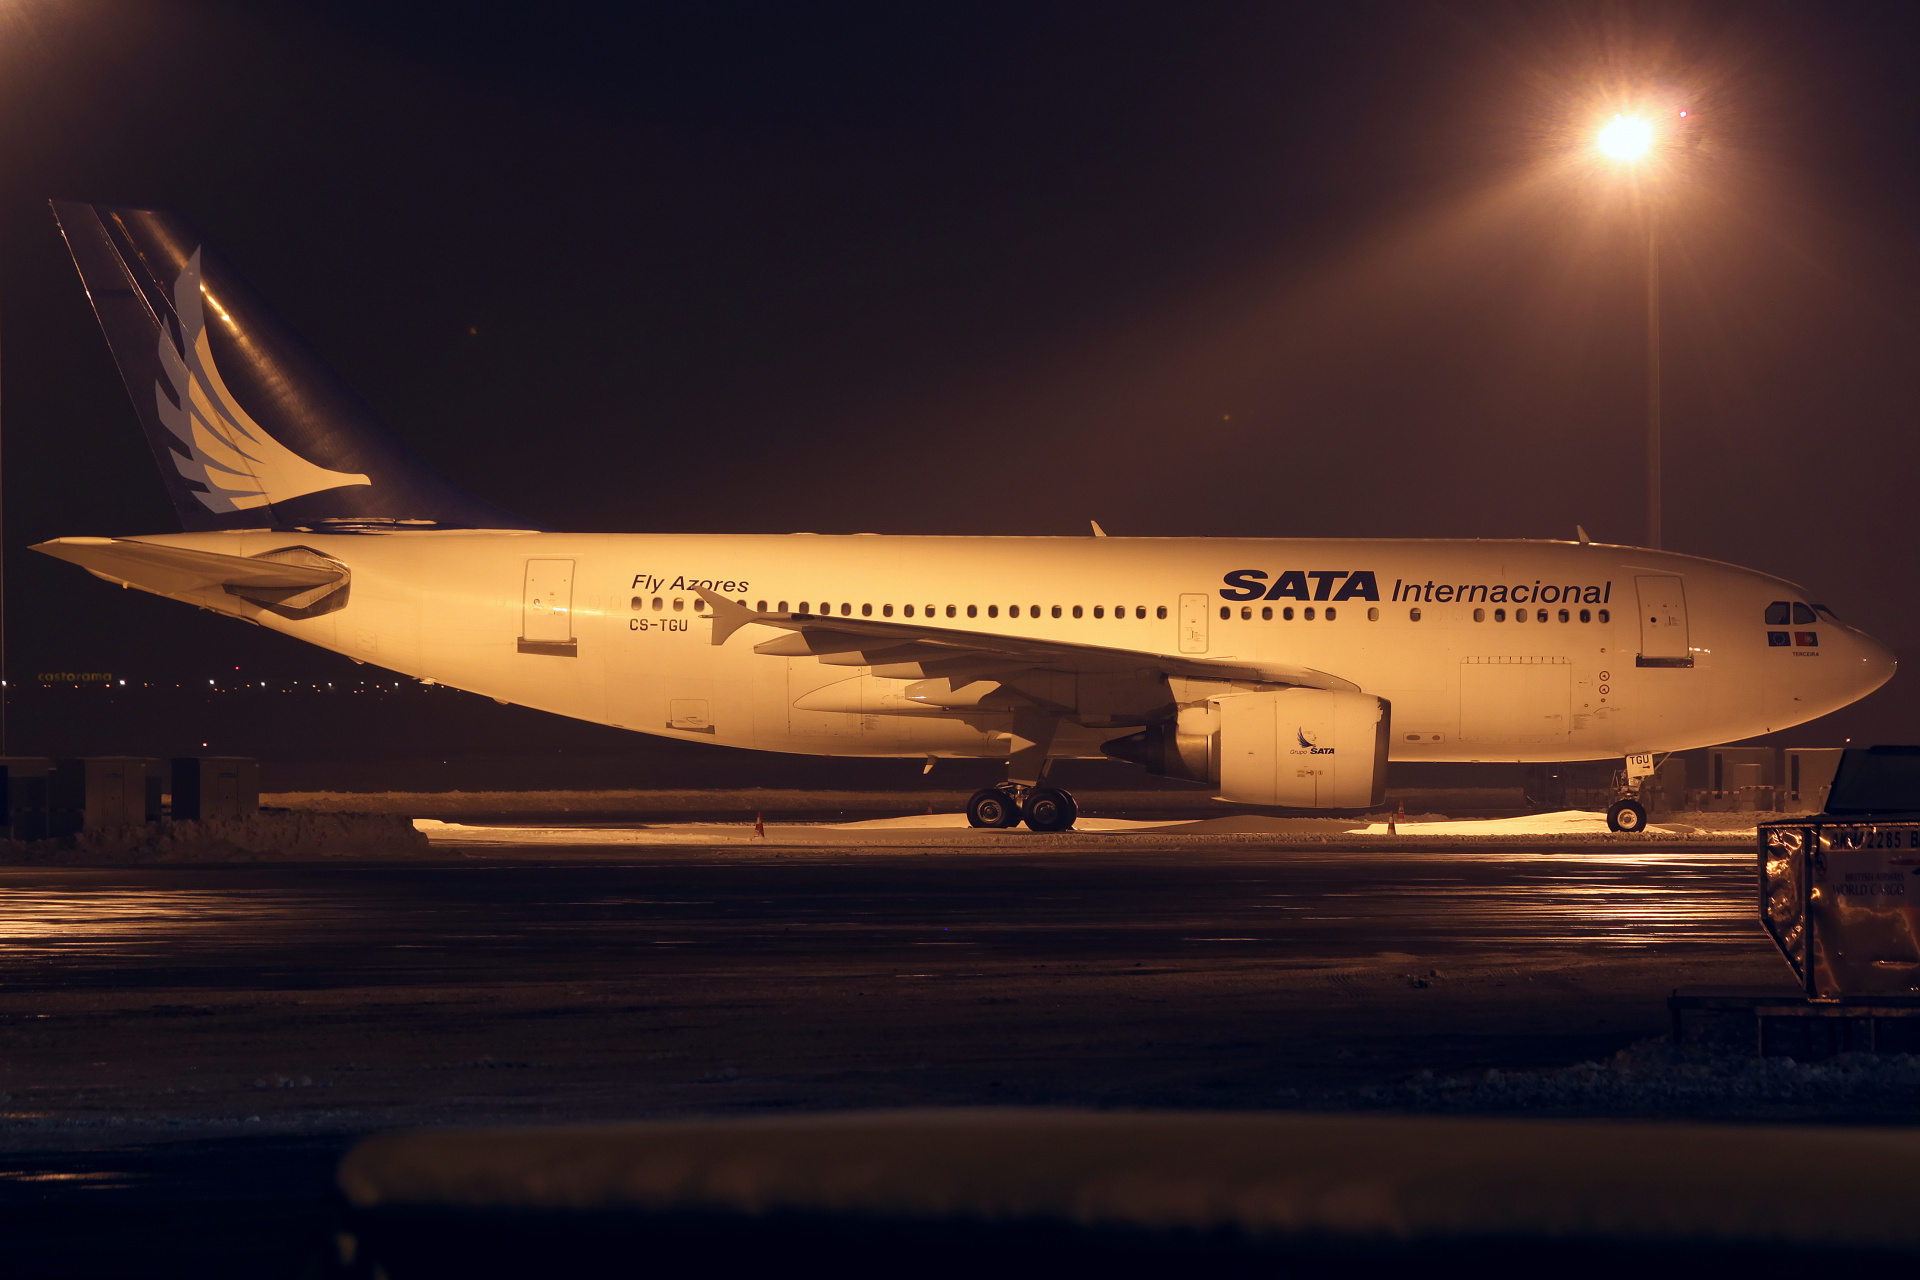 CS-TGU, SATA Internacional (Samoloty » Spotting na EPWA » Airbus A310-300)